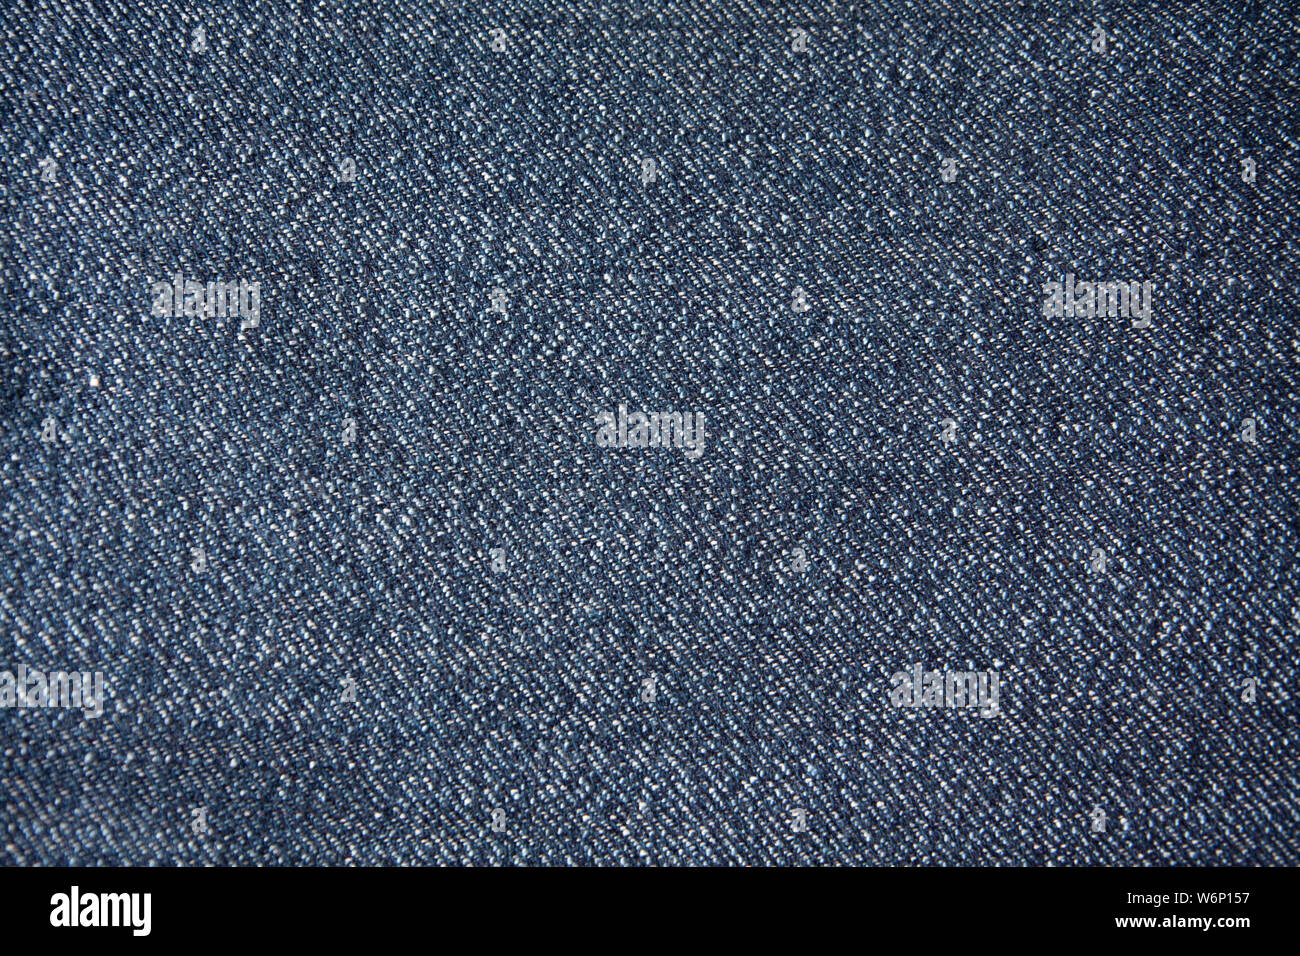 Black fabric texture. Textile background Stock Photo - Alamy